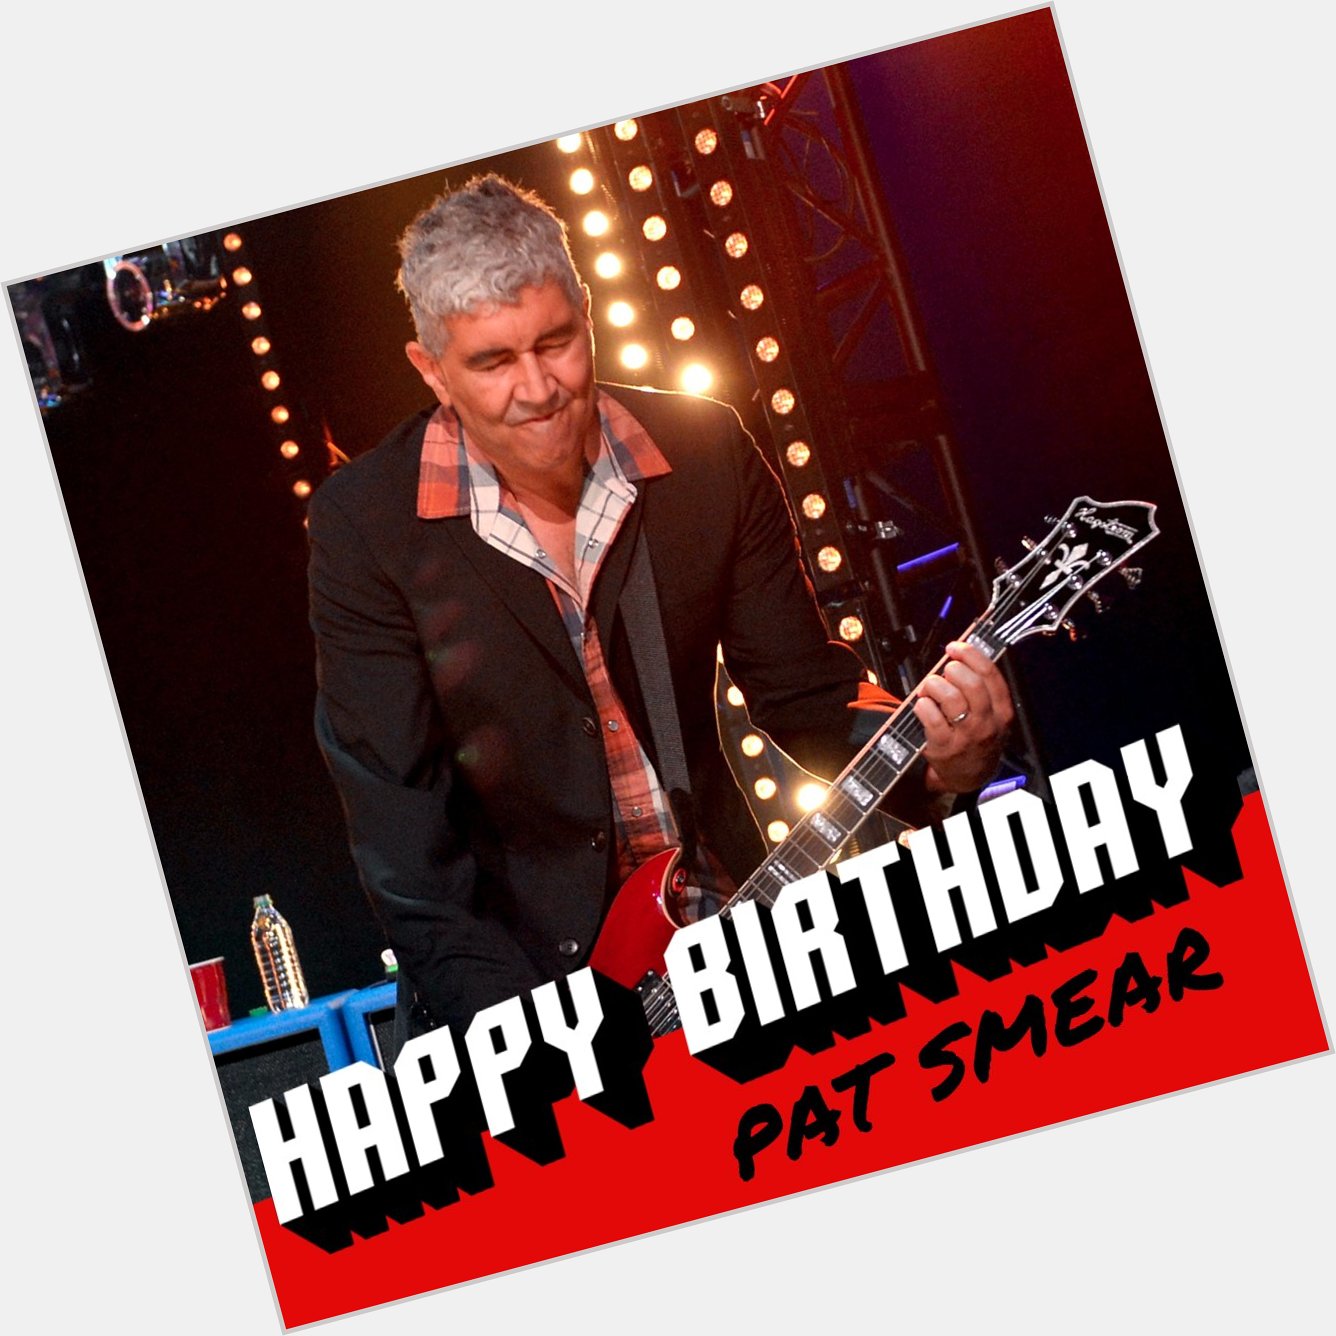 Happy 57th birthday to guitarist Pat Smear! 